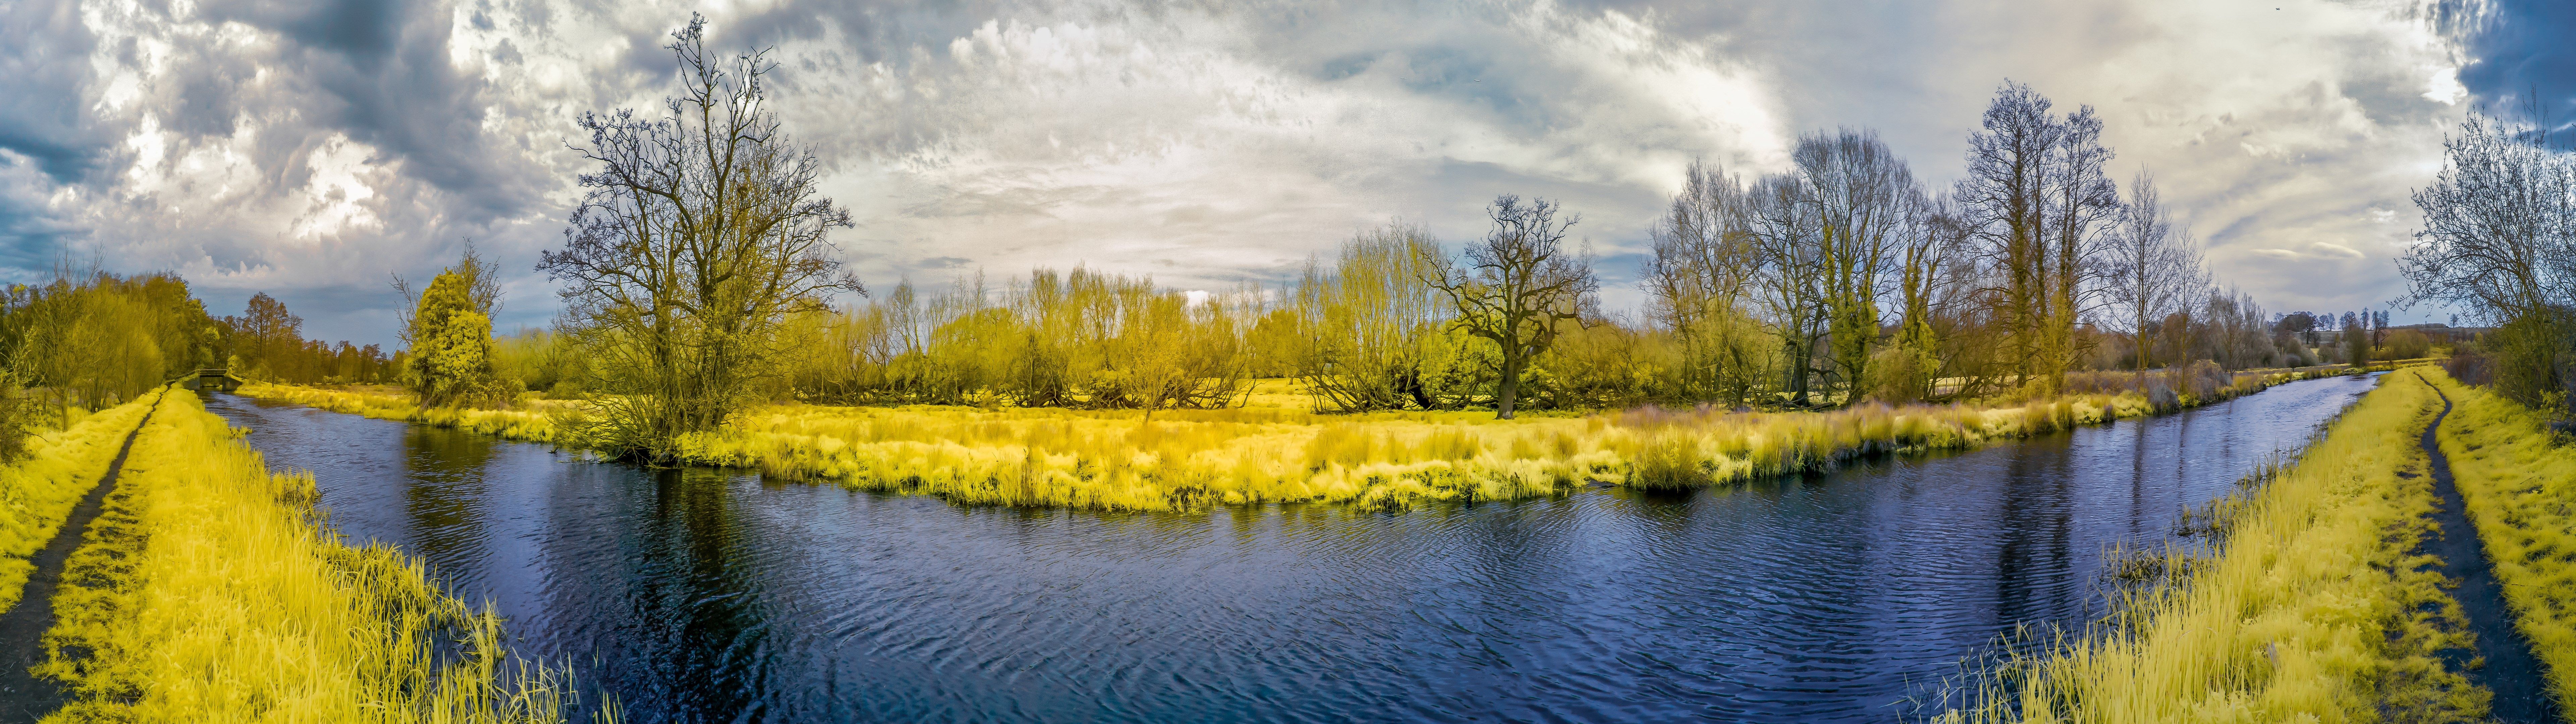 river widescreen retina imac. River, High resolution wallpaper, Image